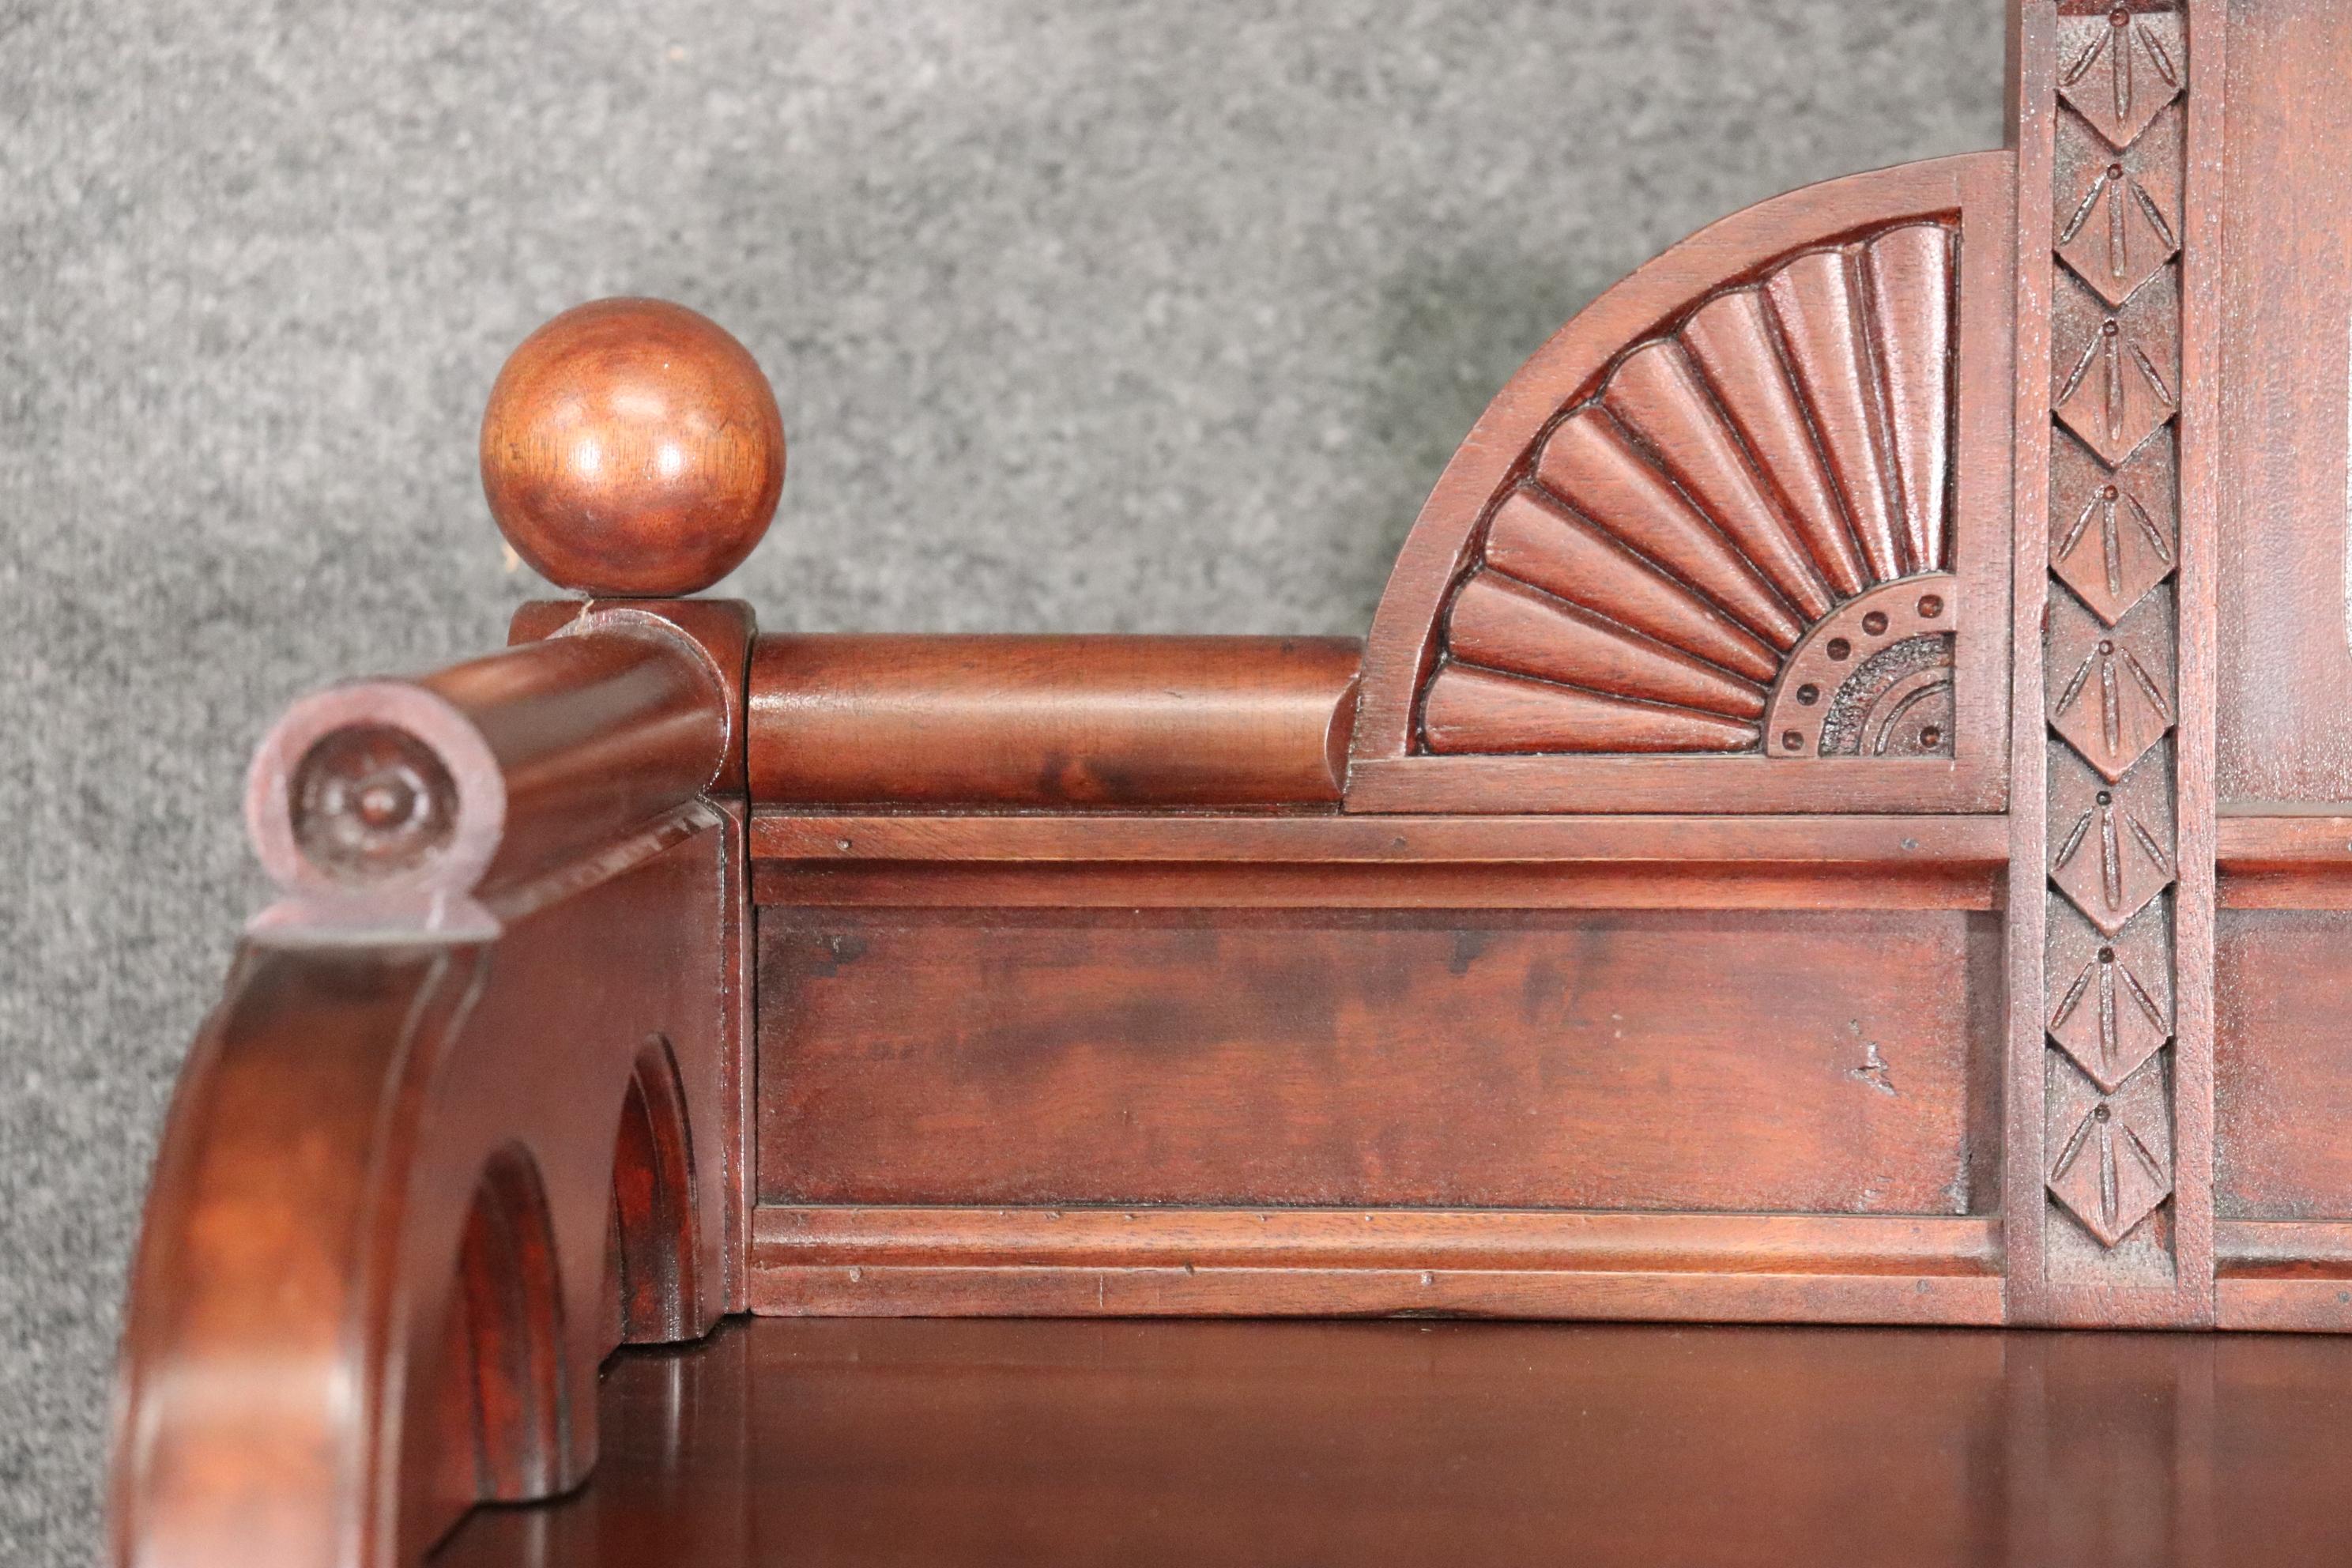 Fine Quality American Victorian Carved Walnut Secretary Desk Circa 1870 13